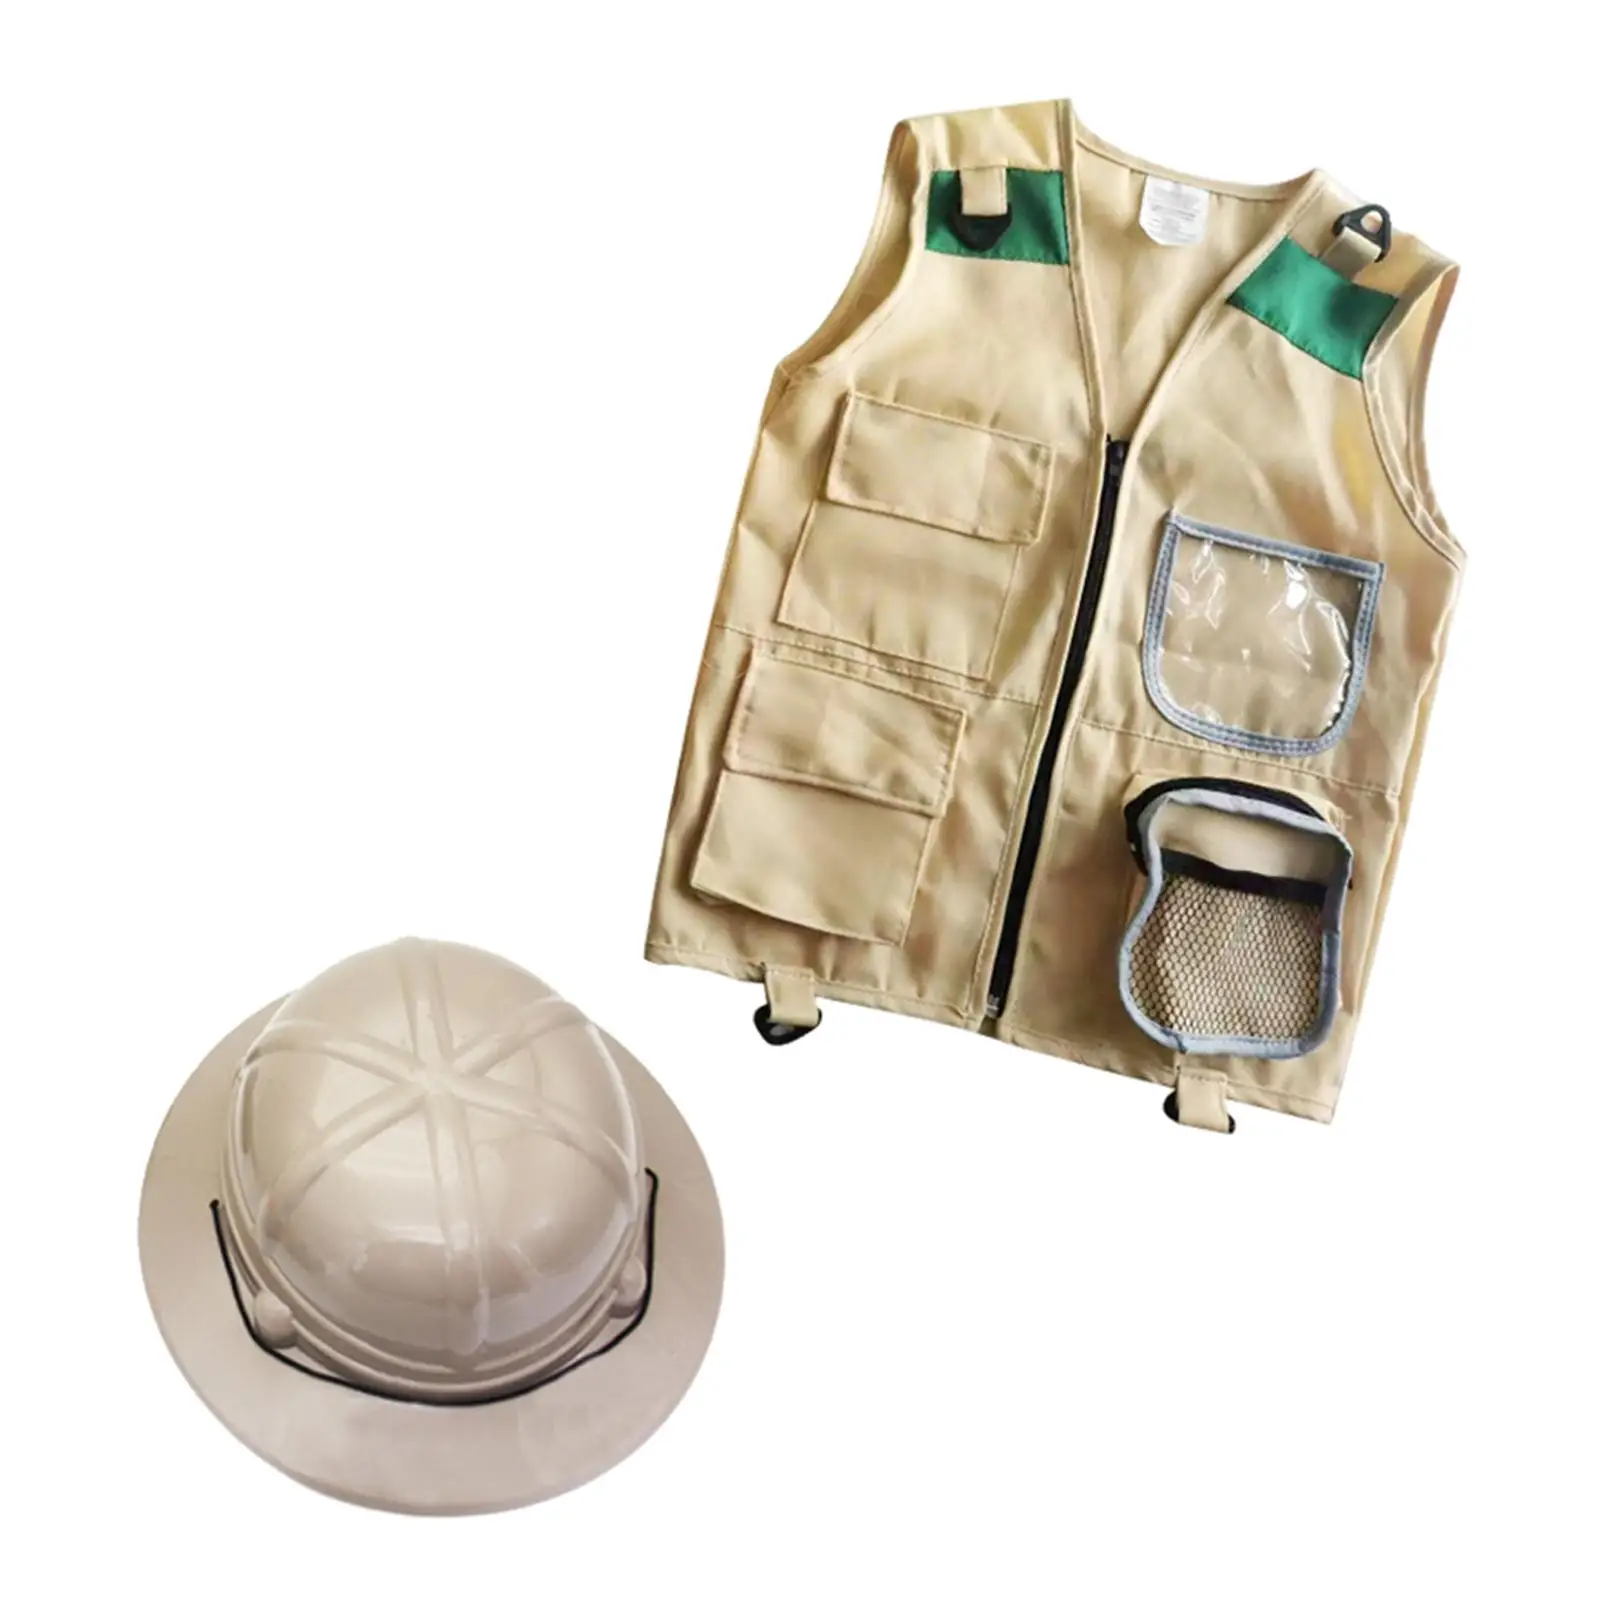 Explorer Kit, Kids Explorer Costume Set, Backyard Cargo Vest Dress up Role Play for Kid